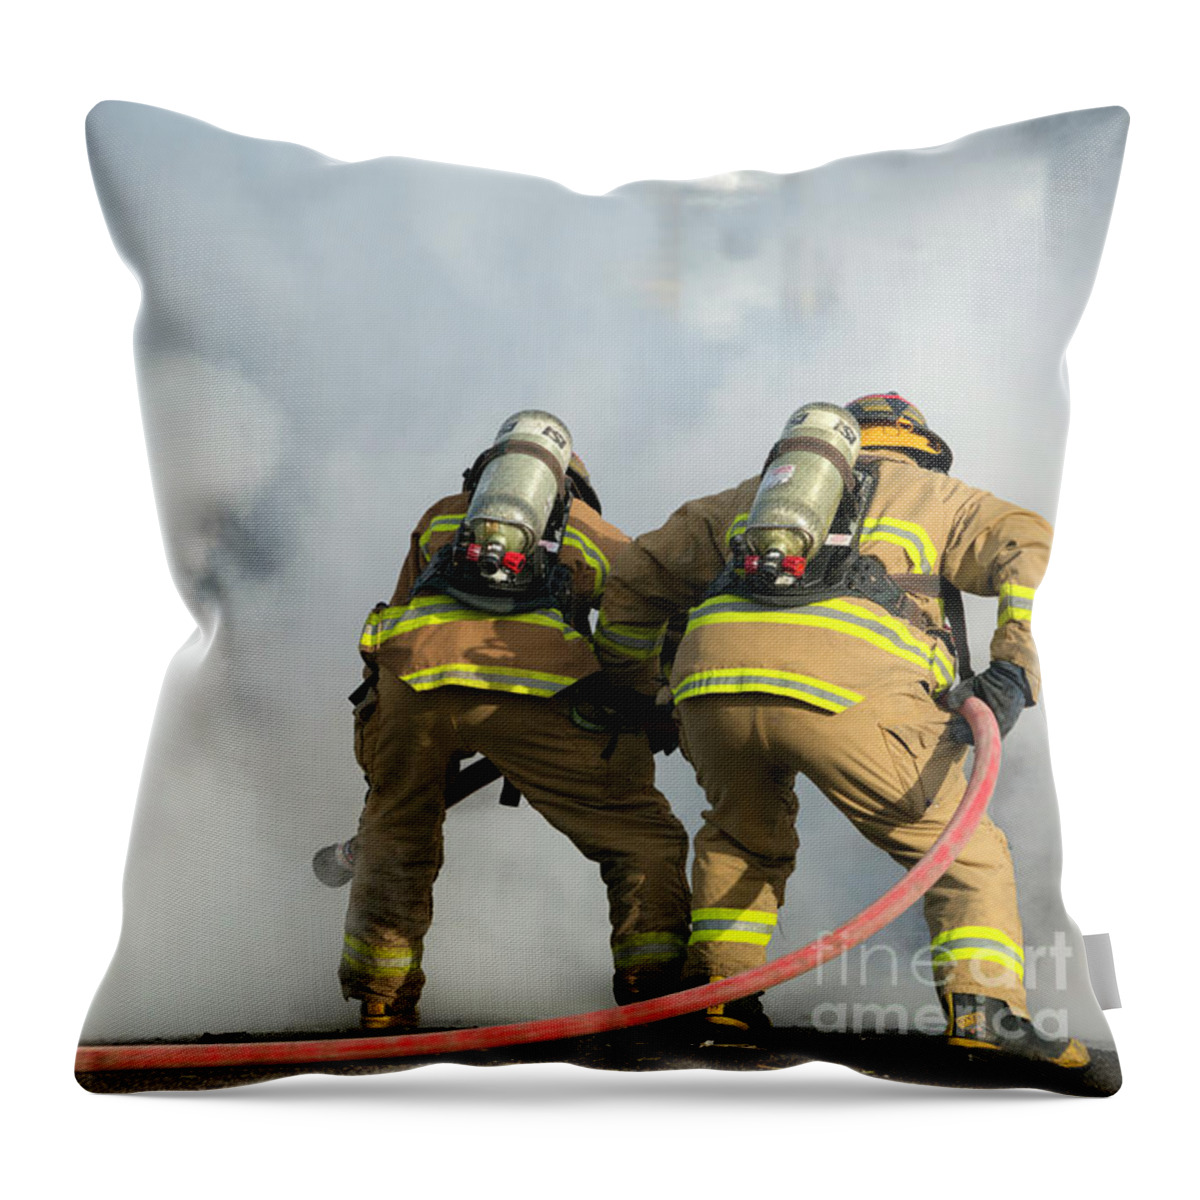 Firemen Throw Pillow featuring the photograph Car Fire by Michael Dawson